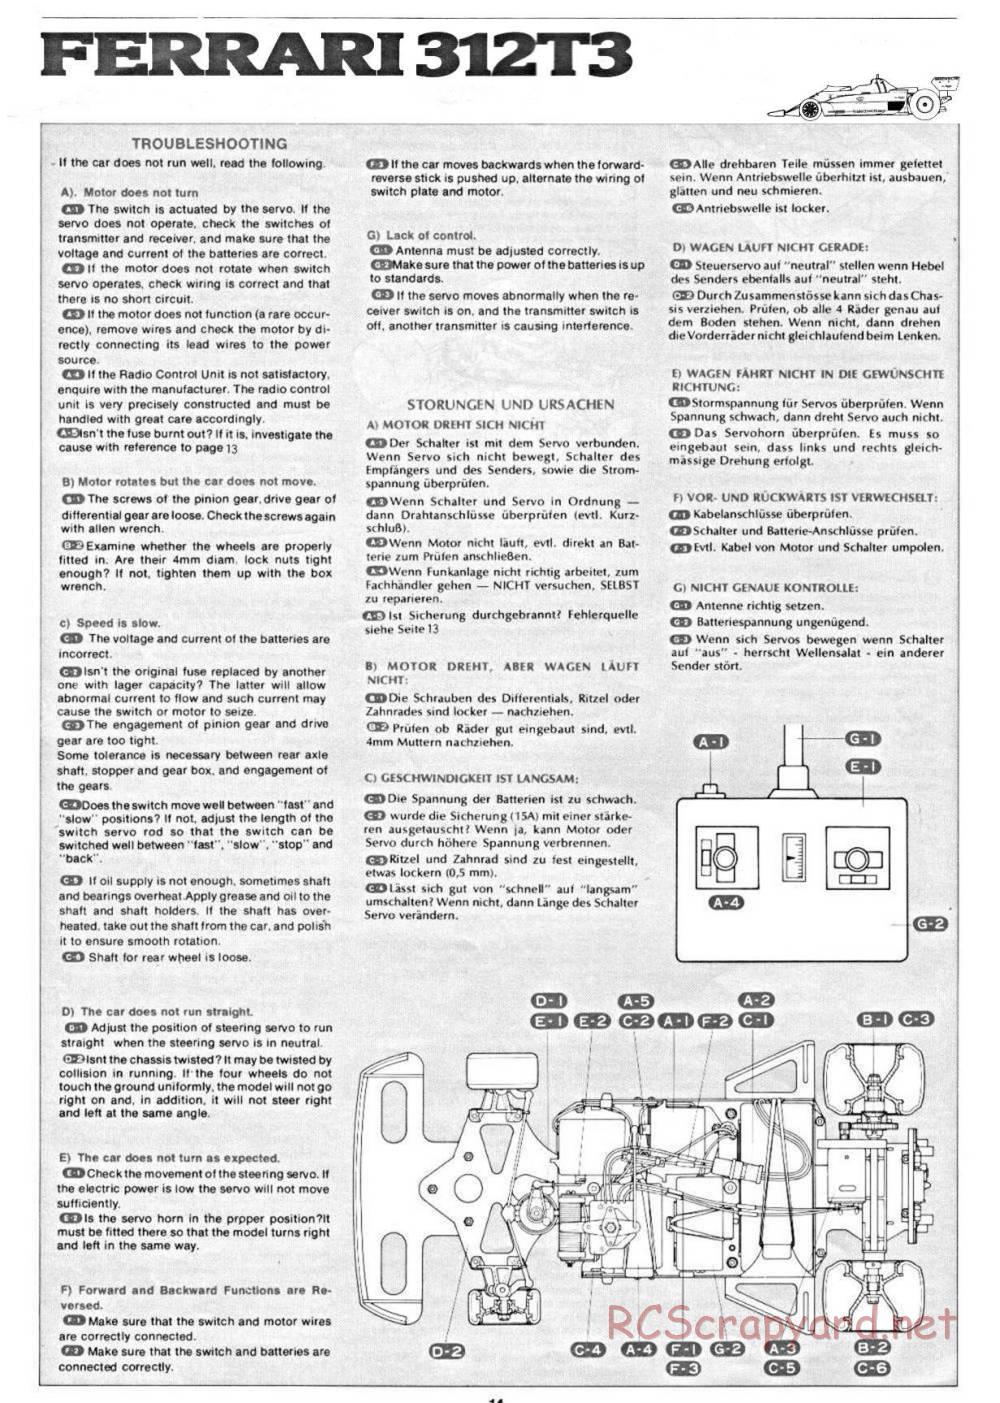 Tamiya - Ferrari 312T3 - 58011 - Manual - Page 14